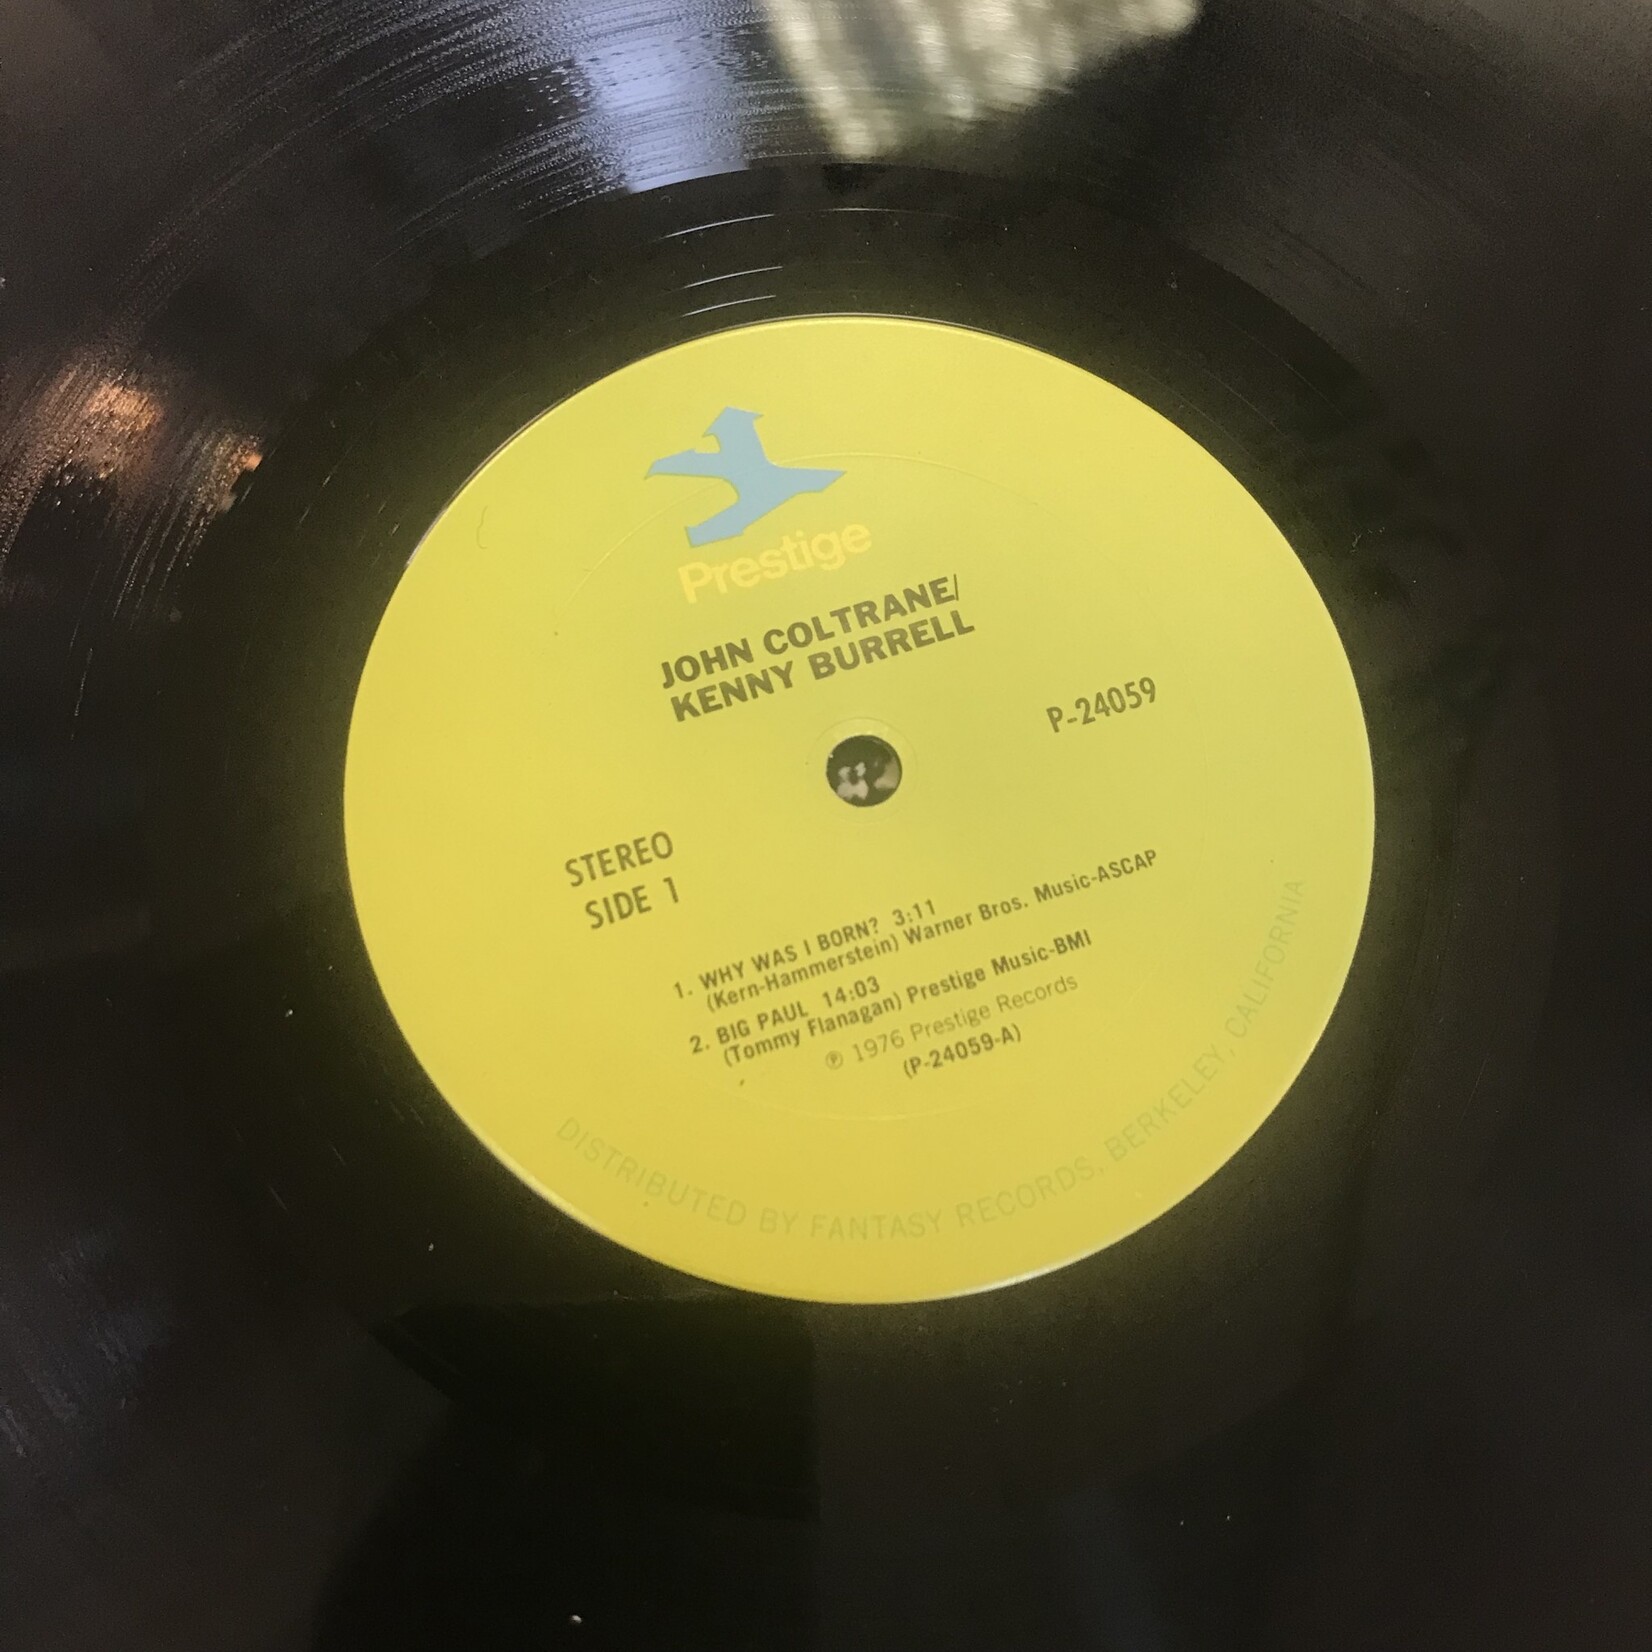 John Coltrane, Kenny Burrell - John Coltrane / Kenny Burrell - P24059 - Vinyl LP (USED)